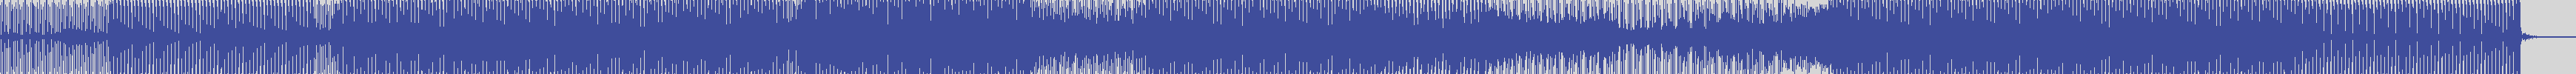 atomic_recordings [AR003] Jeff Jackson - Get Down! [Original Mix] audio wave form